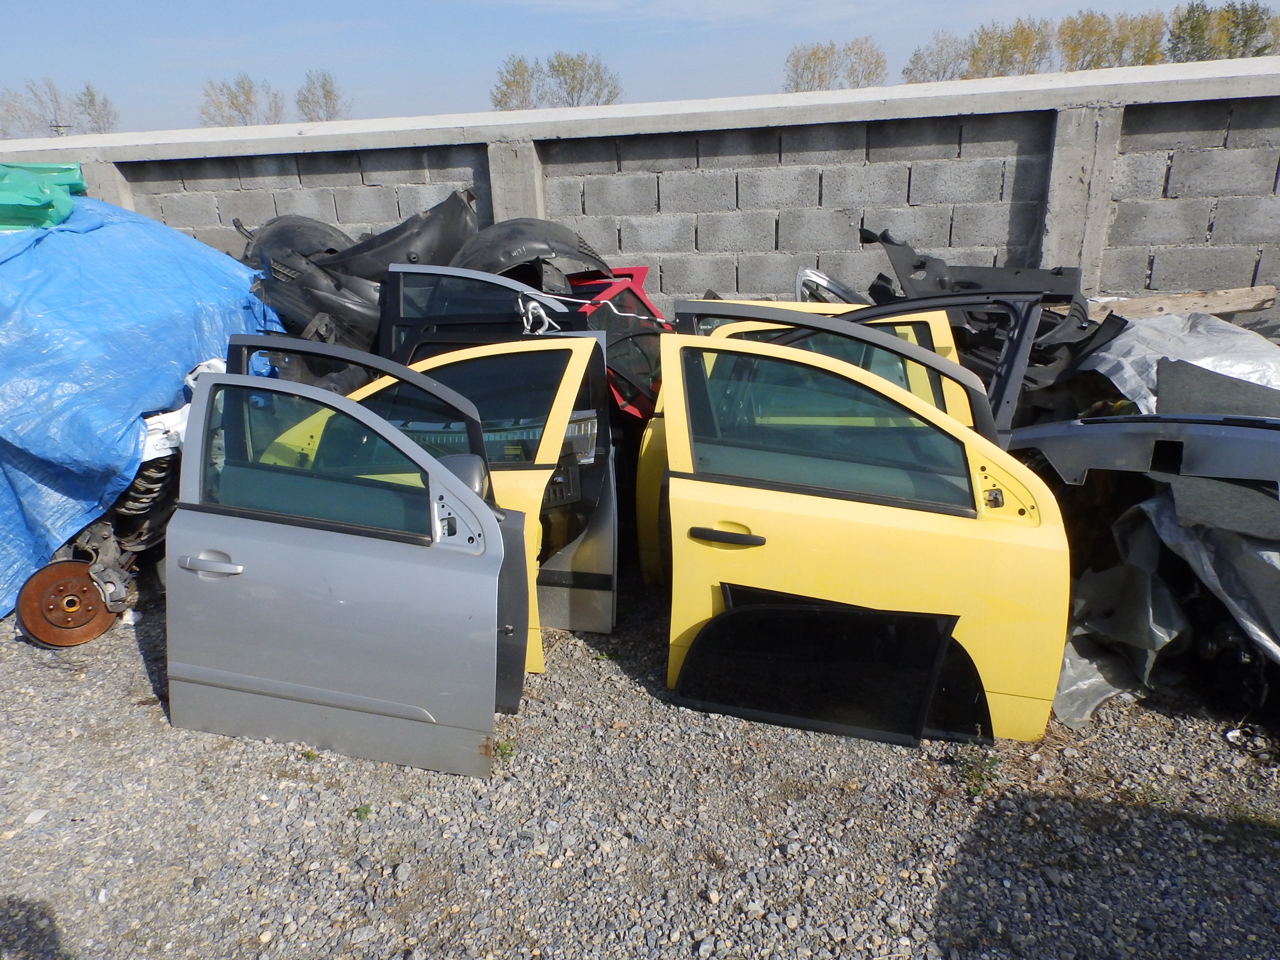 CAR WASTE AND PARTS OPEL PEDJA Used car parts Sabac - Photo 3